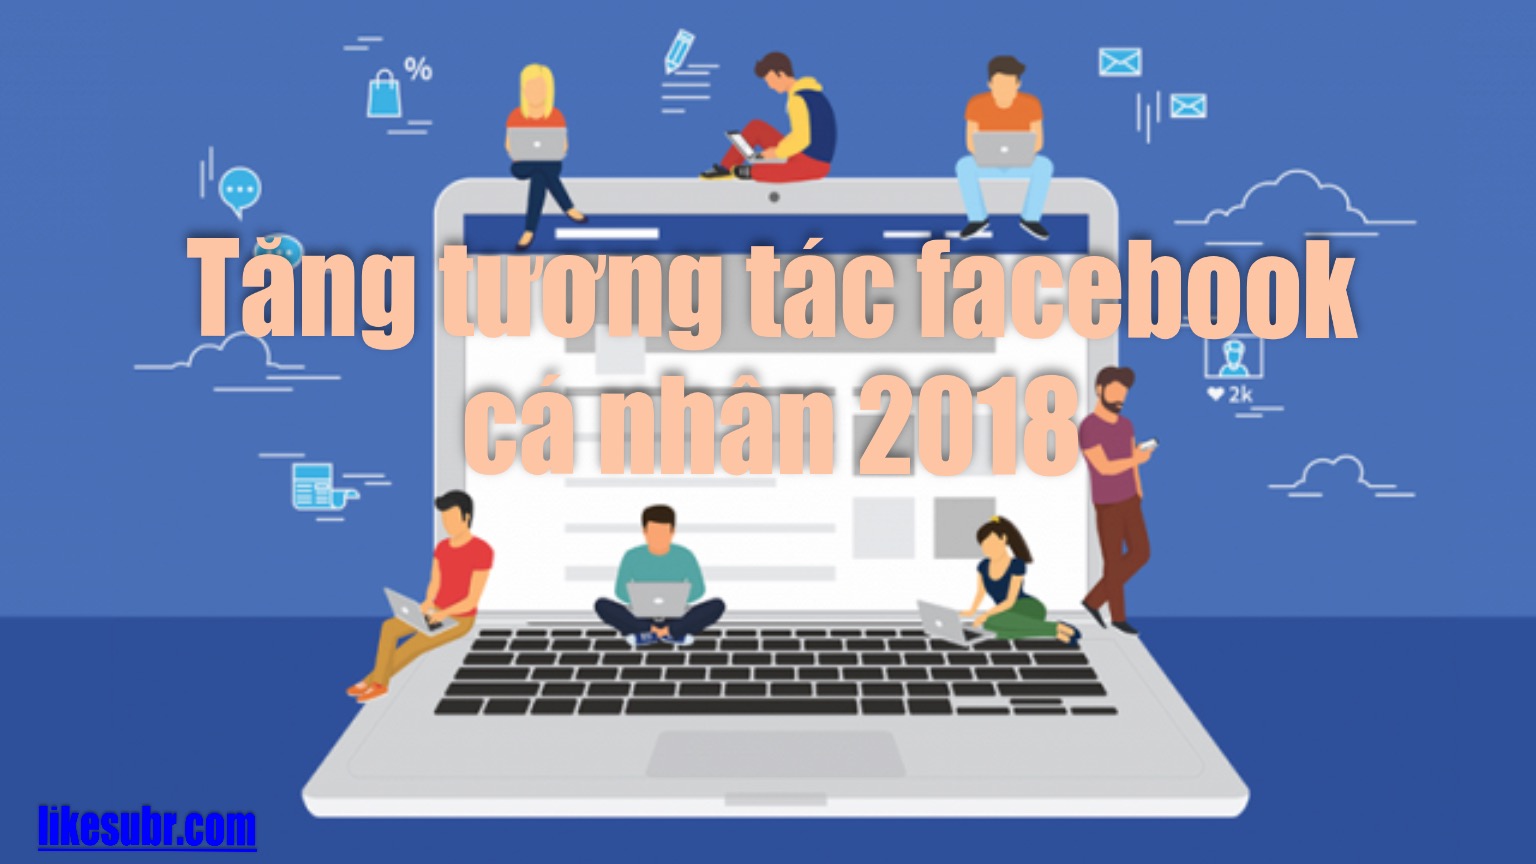 Tăng tương tác facebook cá nhân 2018